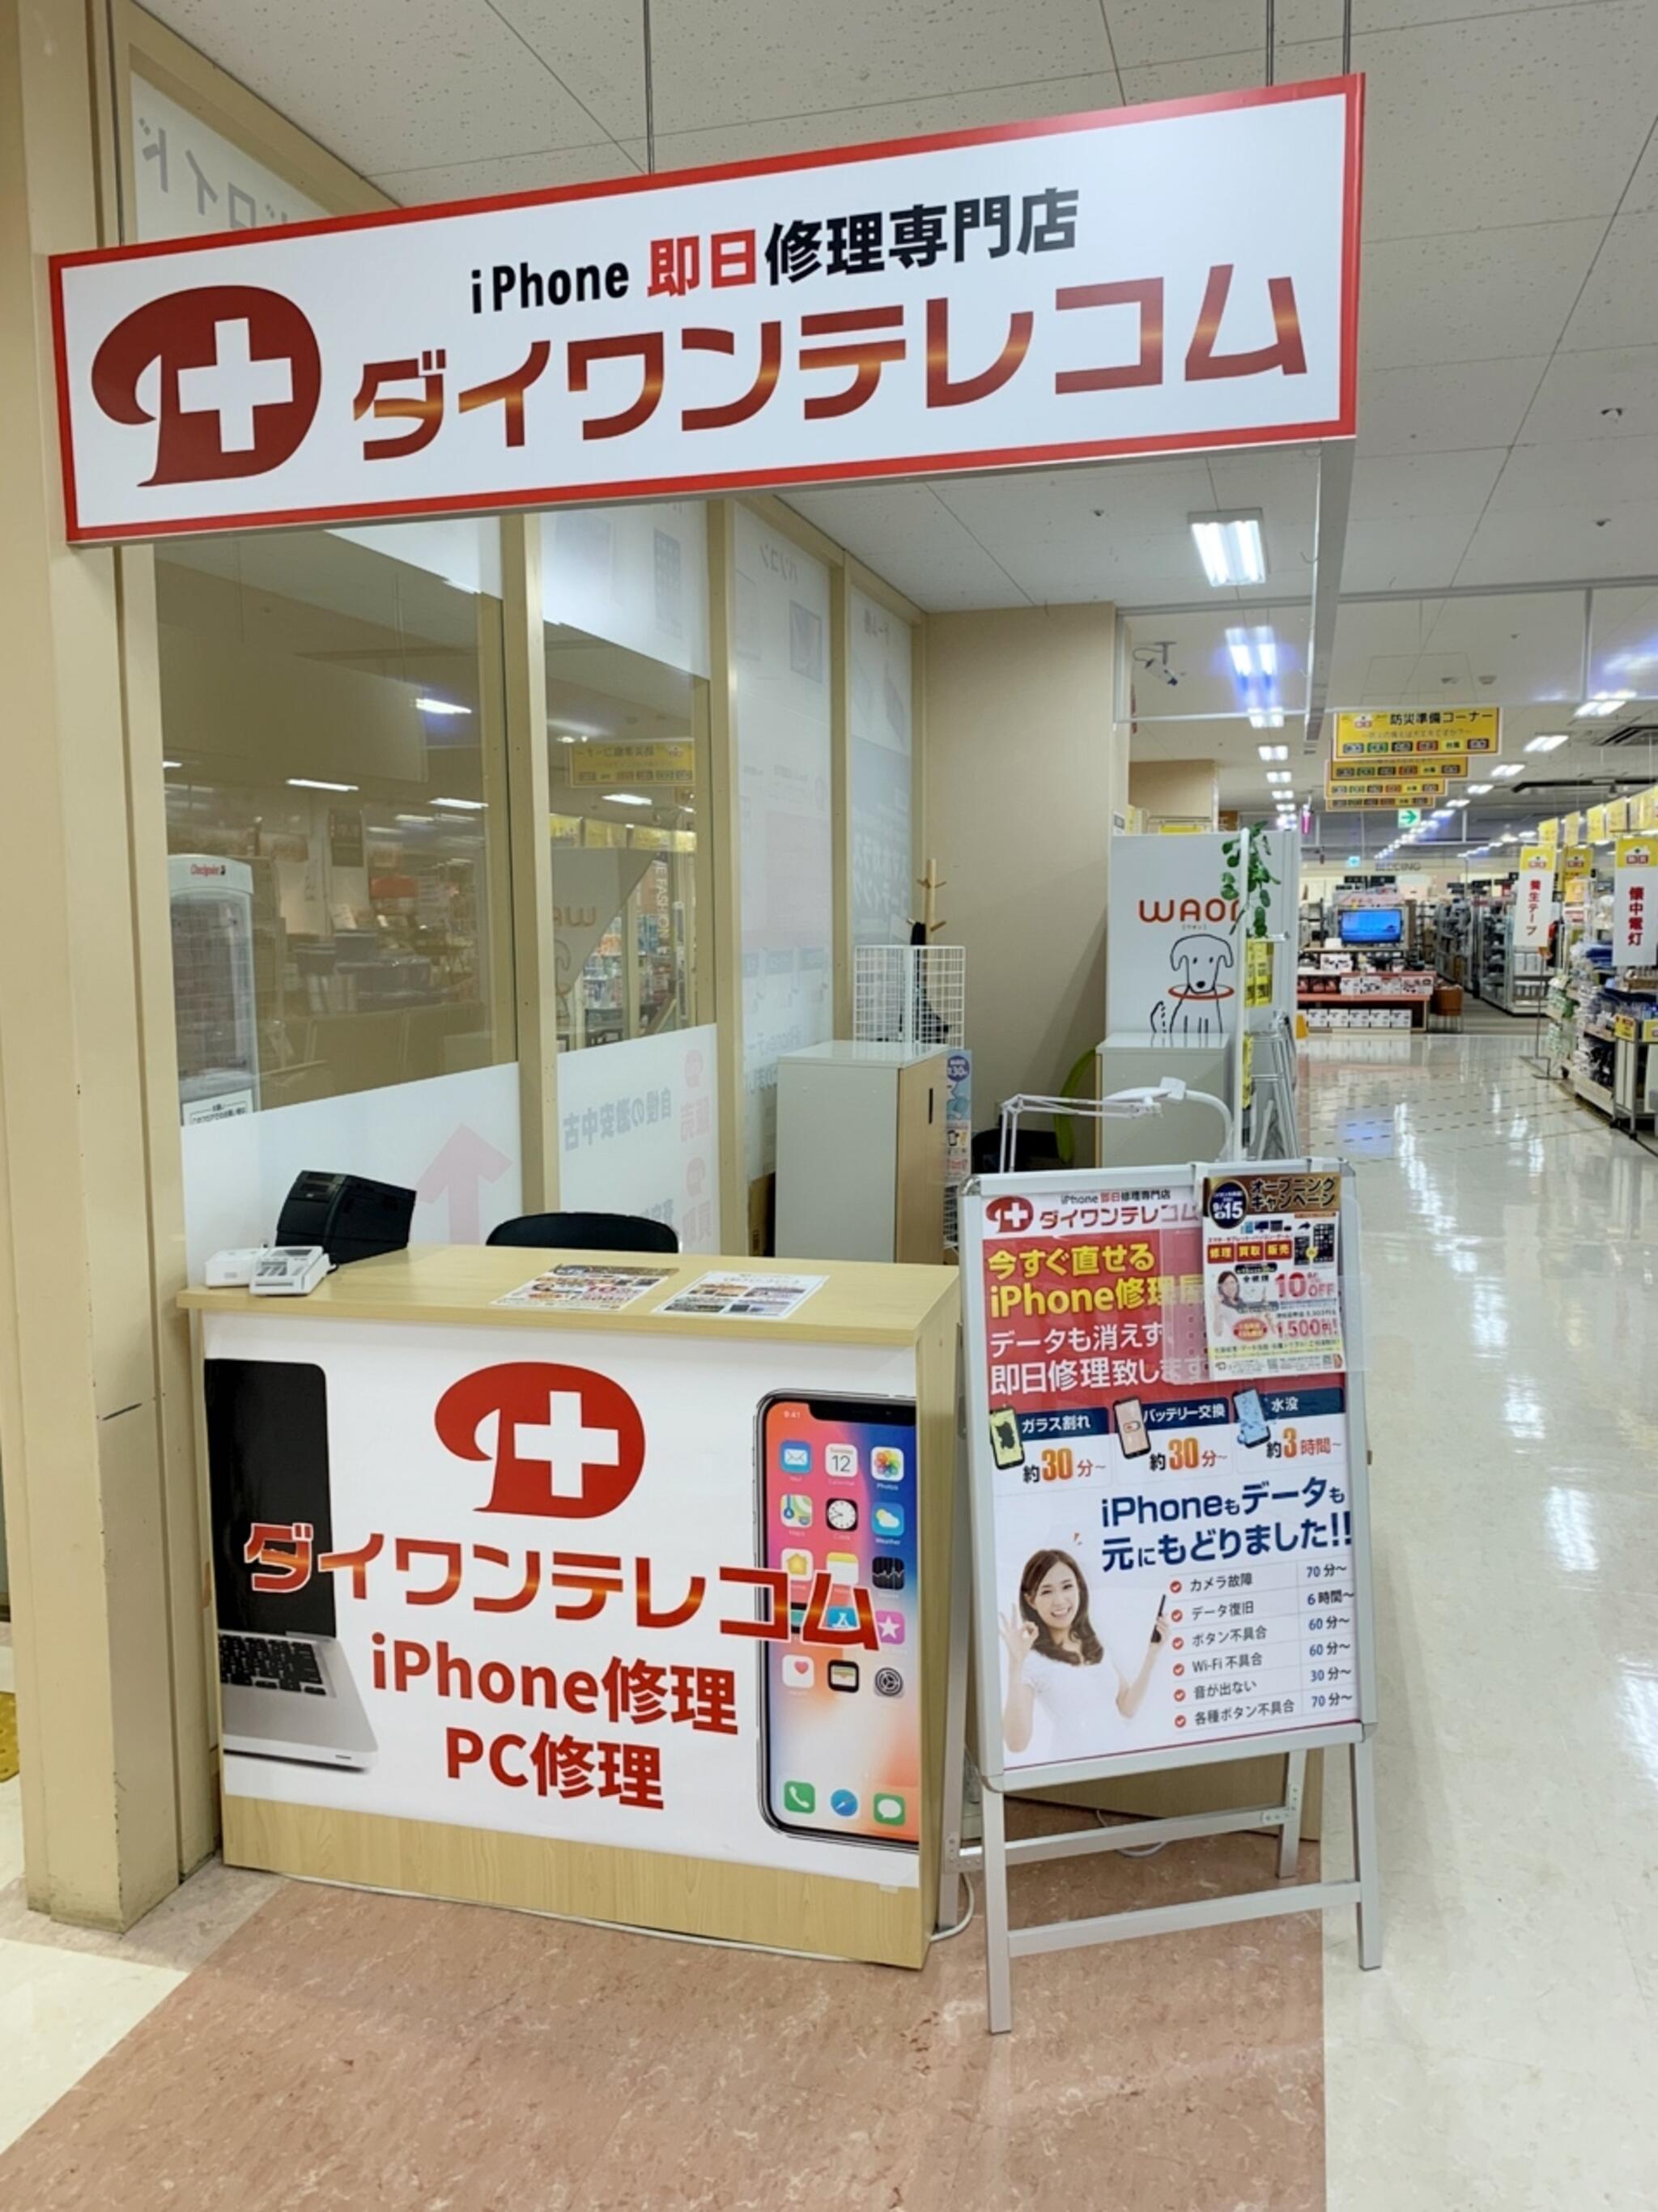 iPhone修理 ダイワンテレコム ふじみ野イオン大井店の代表写真6